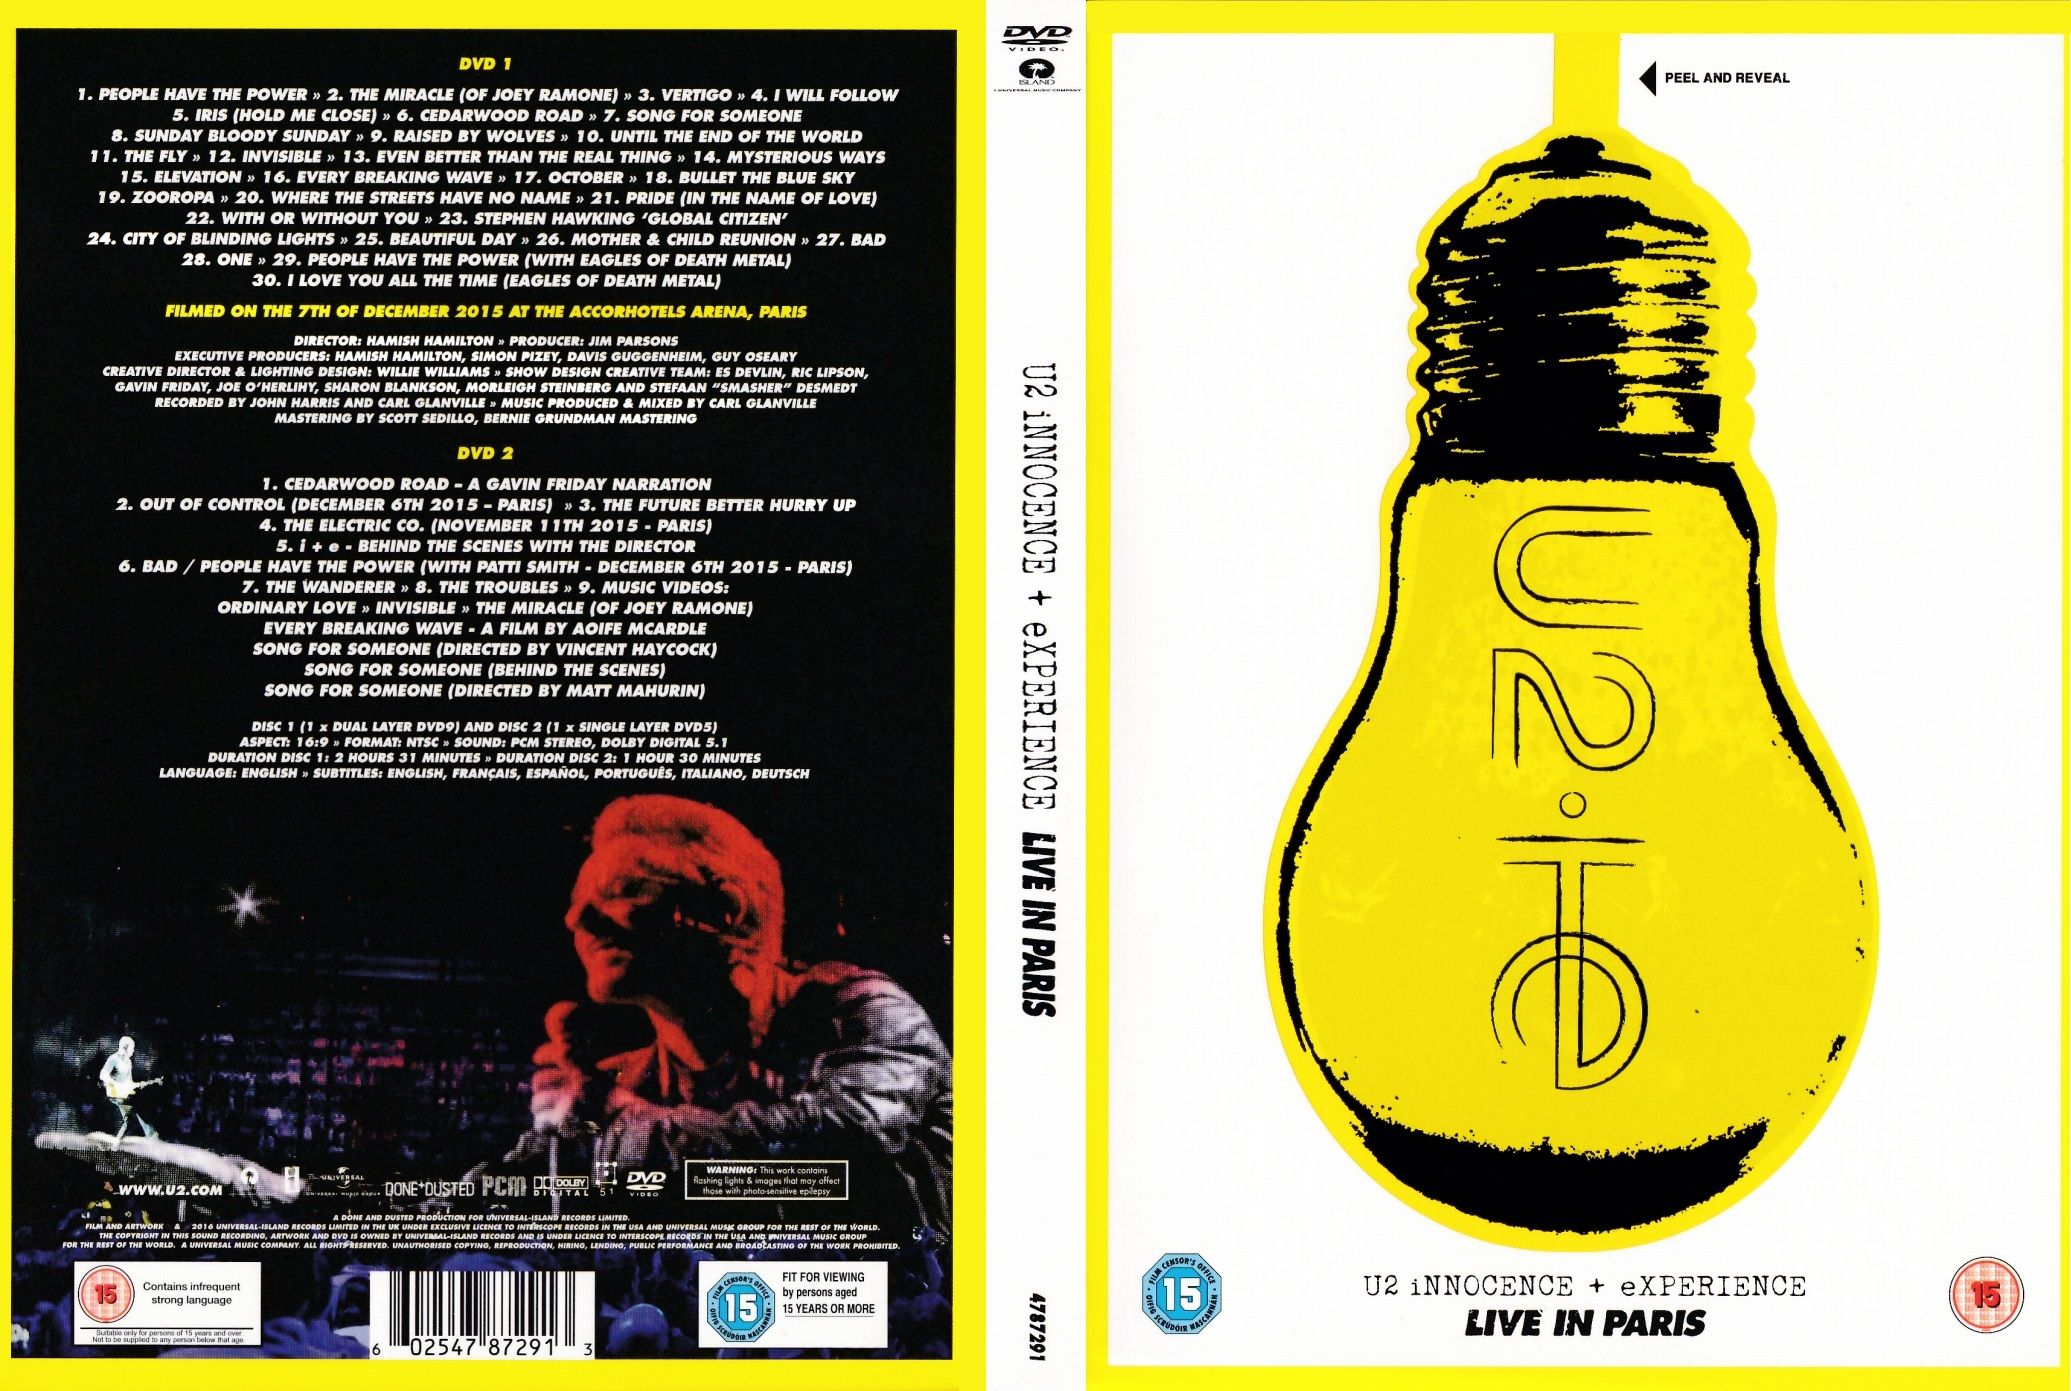 Jaquette DVD U2 innocence + experience live in Paris